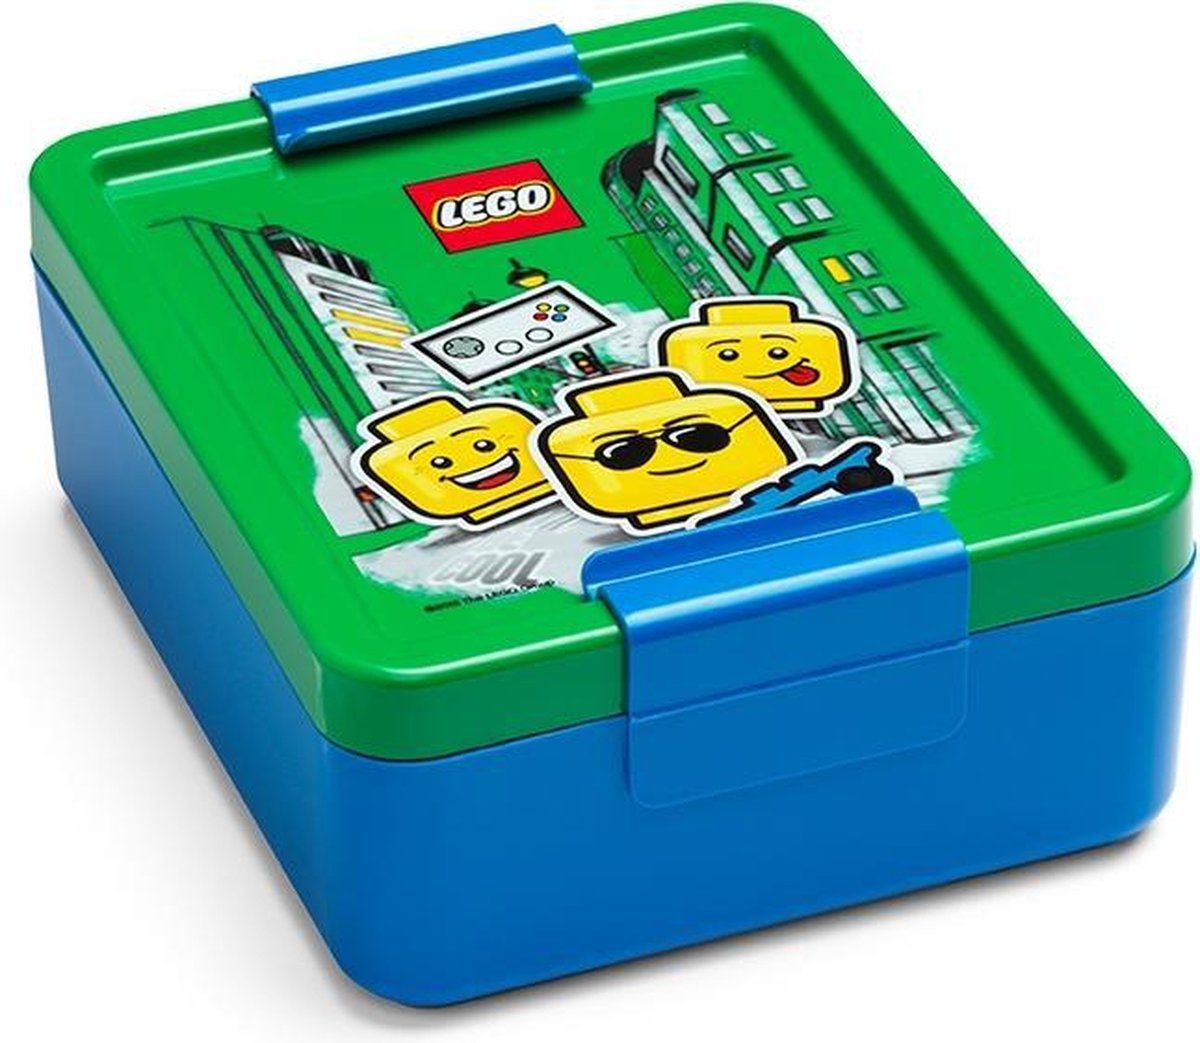 Lego broodtrommel Iconic boy - Groen